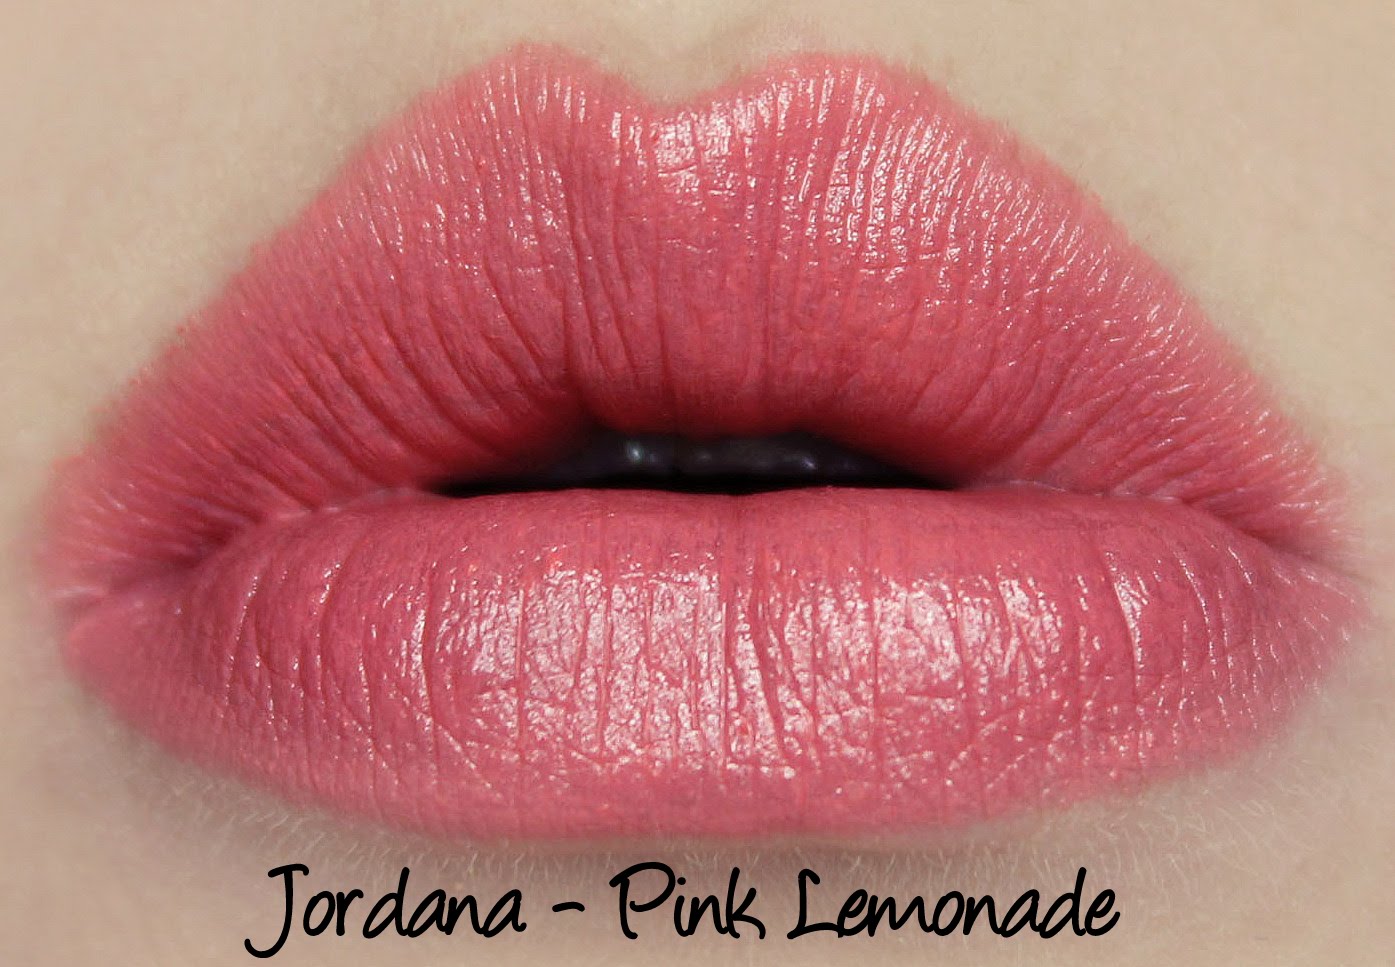 Jordana Lipsticks - Pink Lemonade Swatches & Review